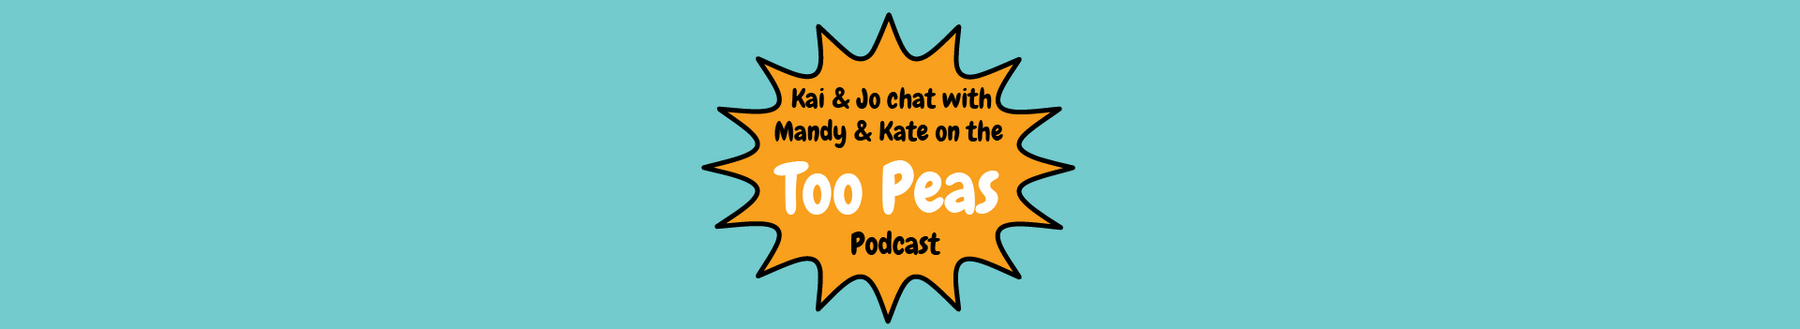 Kai & Jo talk to Mandy & Kate from Too Peas Podcast